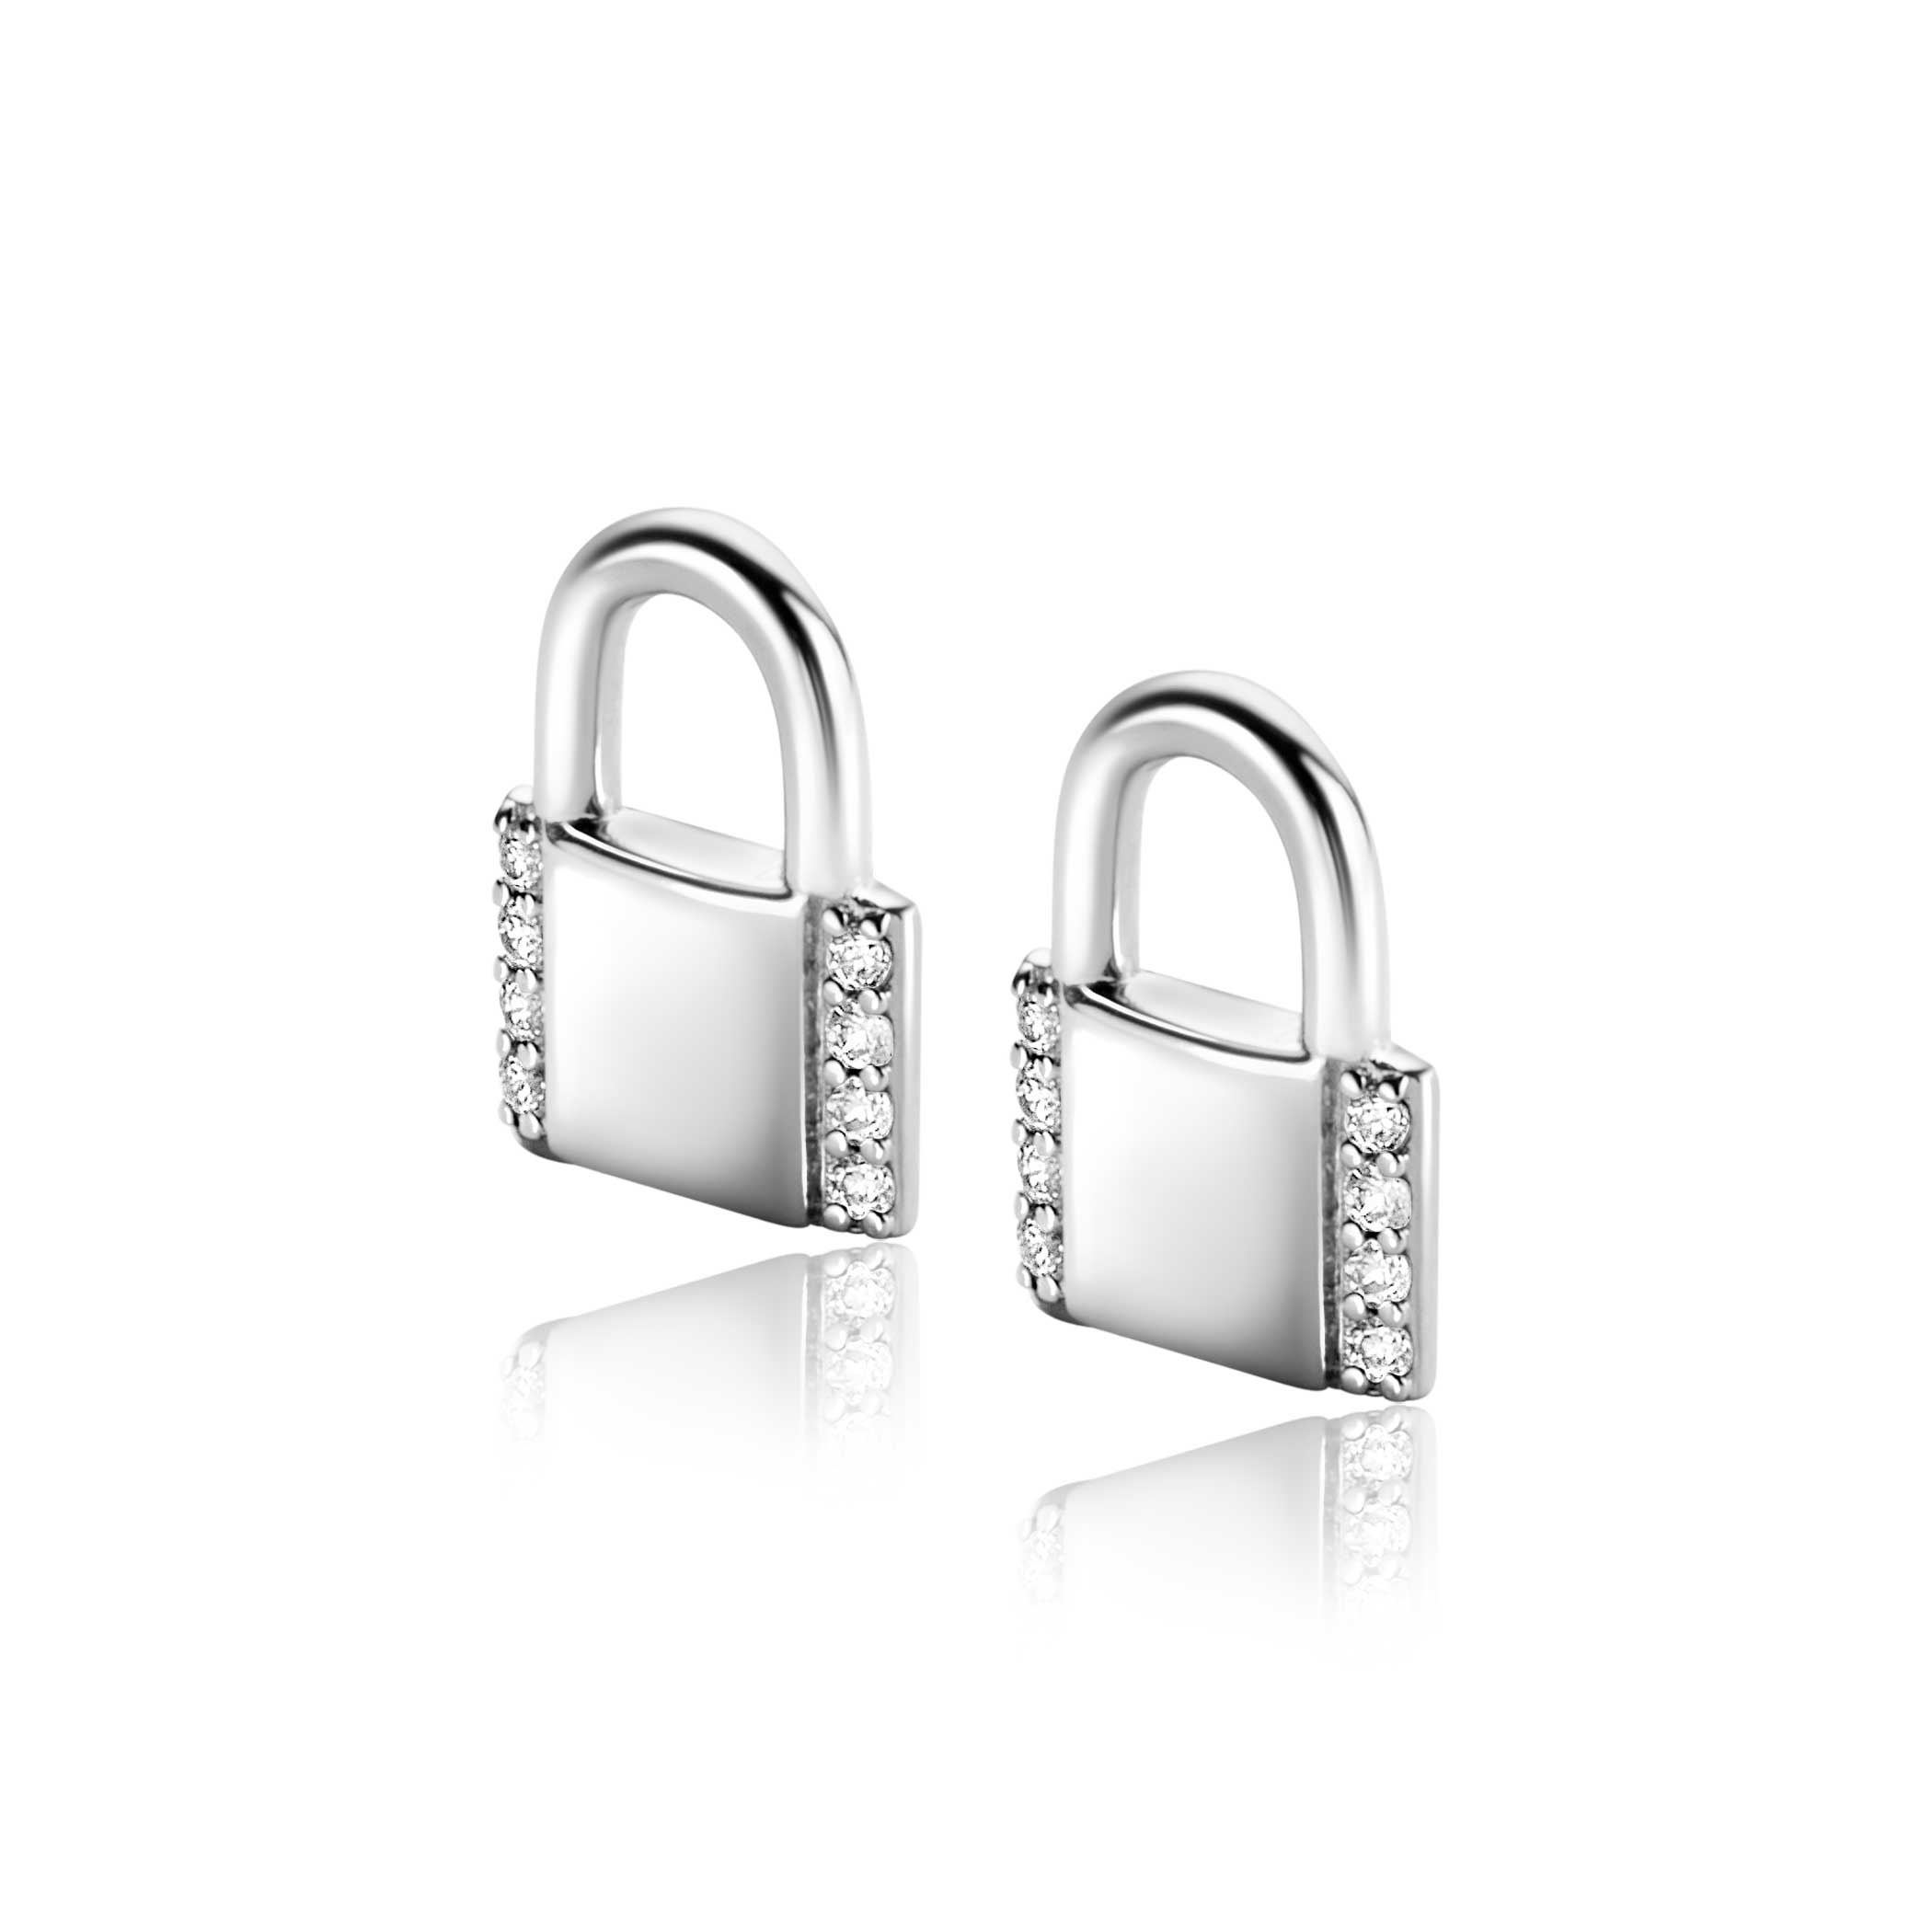 10mm ZINZI Sterling Silver Earrings Pendants Trendy Lock Set with White Zirconias ZICH2391 (excl. hoop earrings)